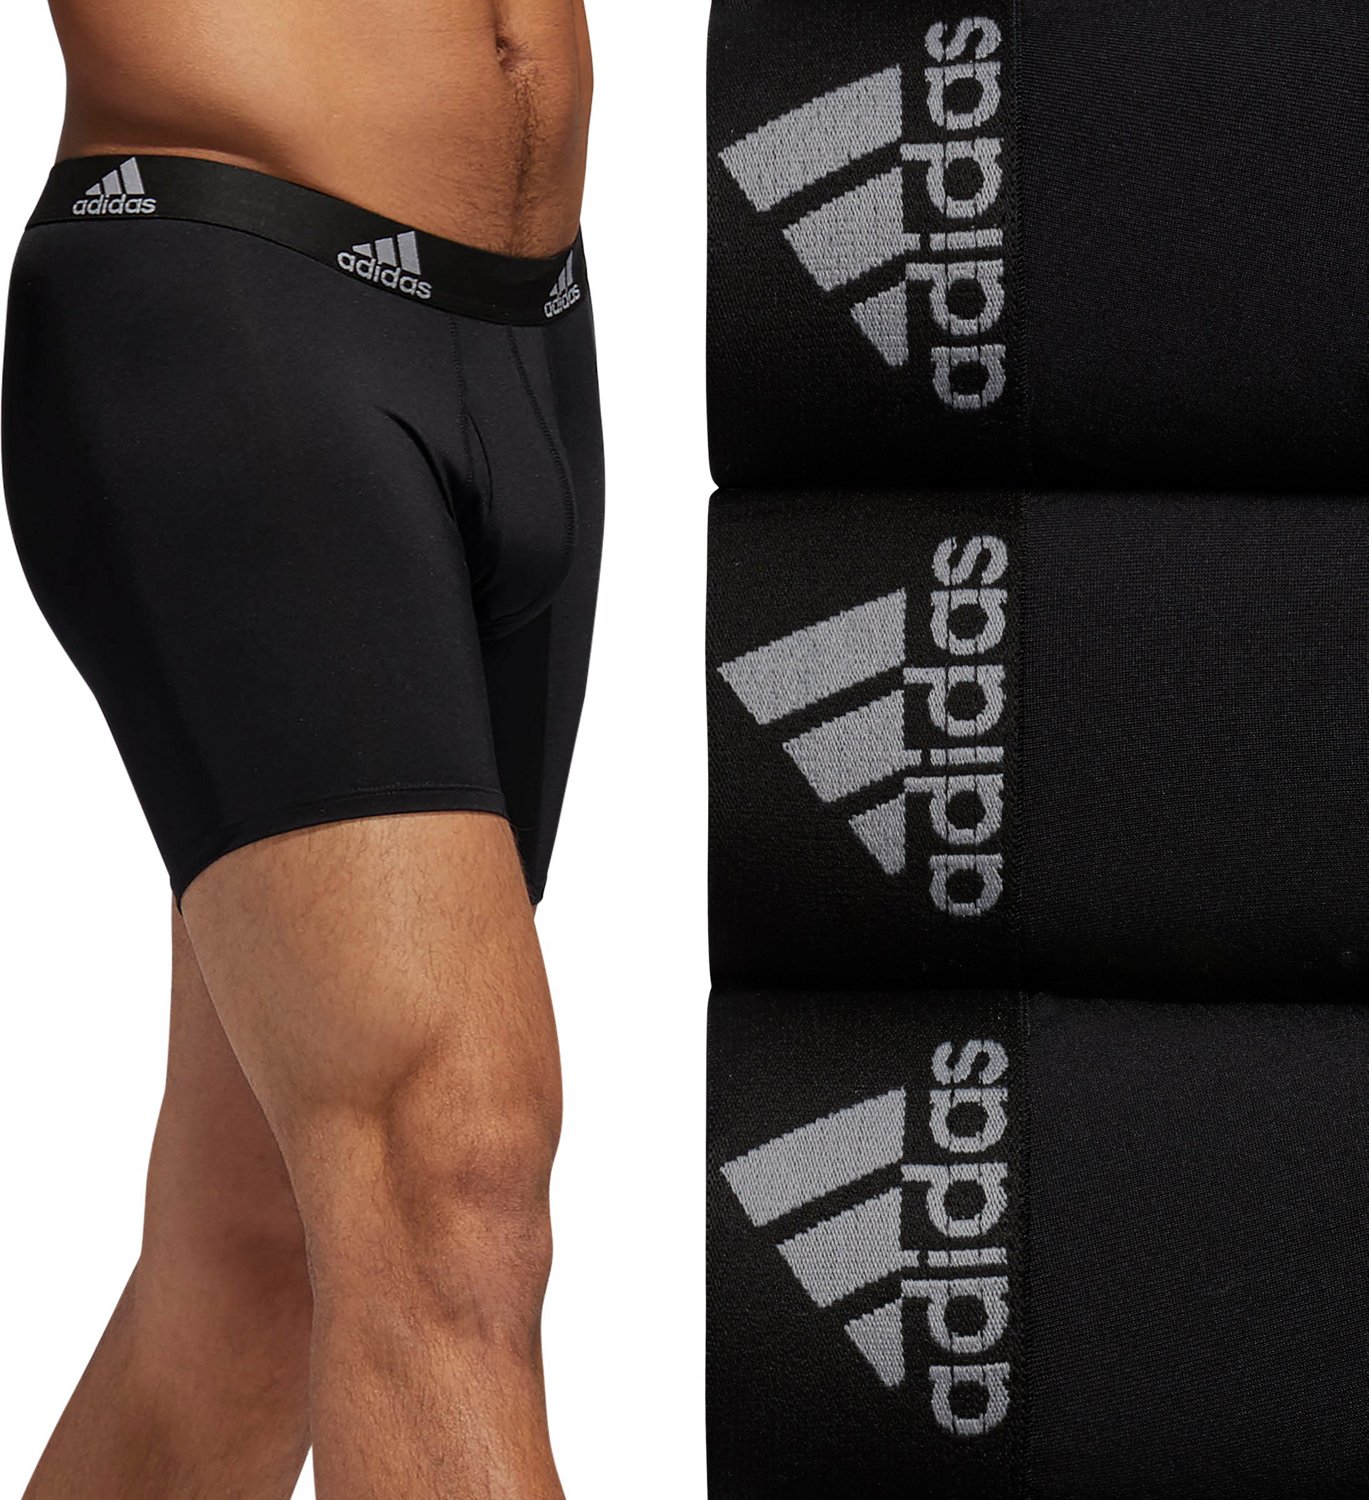 Adidas Mens Sport Performance Boxer Briefs Climacool Underwear (2 Pack)  Black